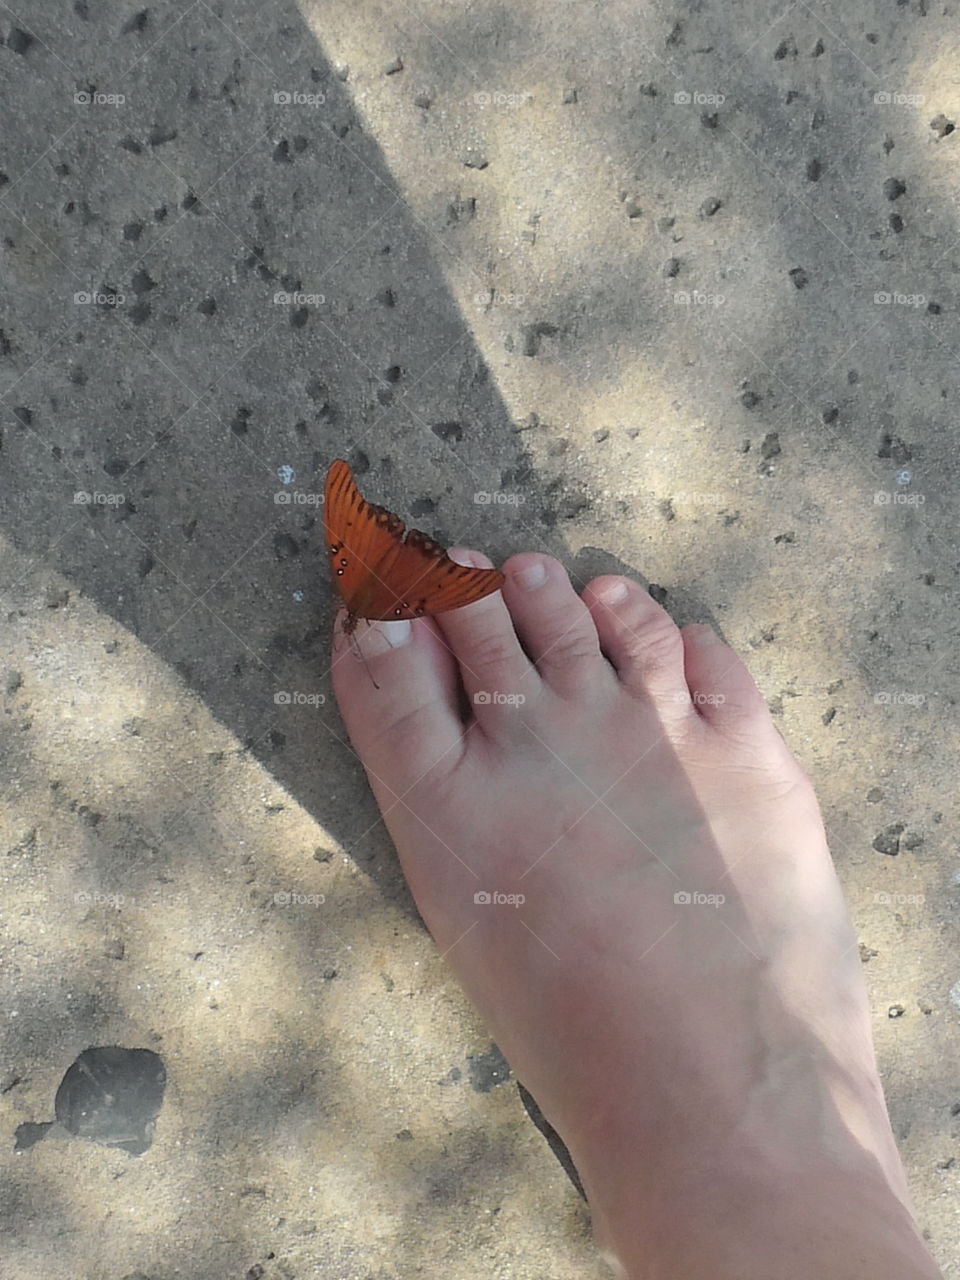 butterfly on foot